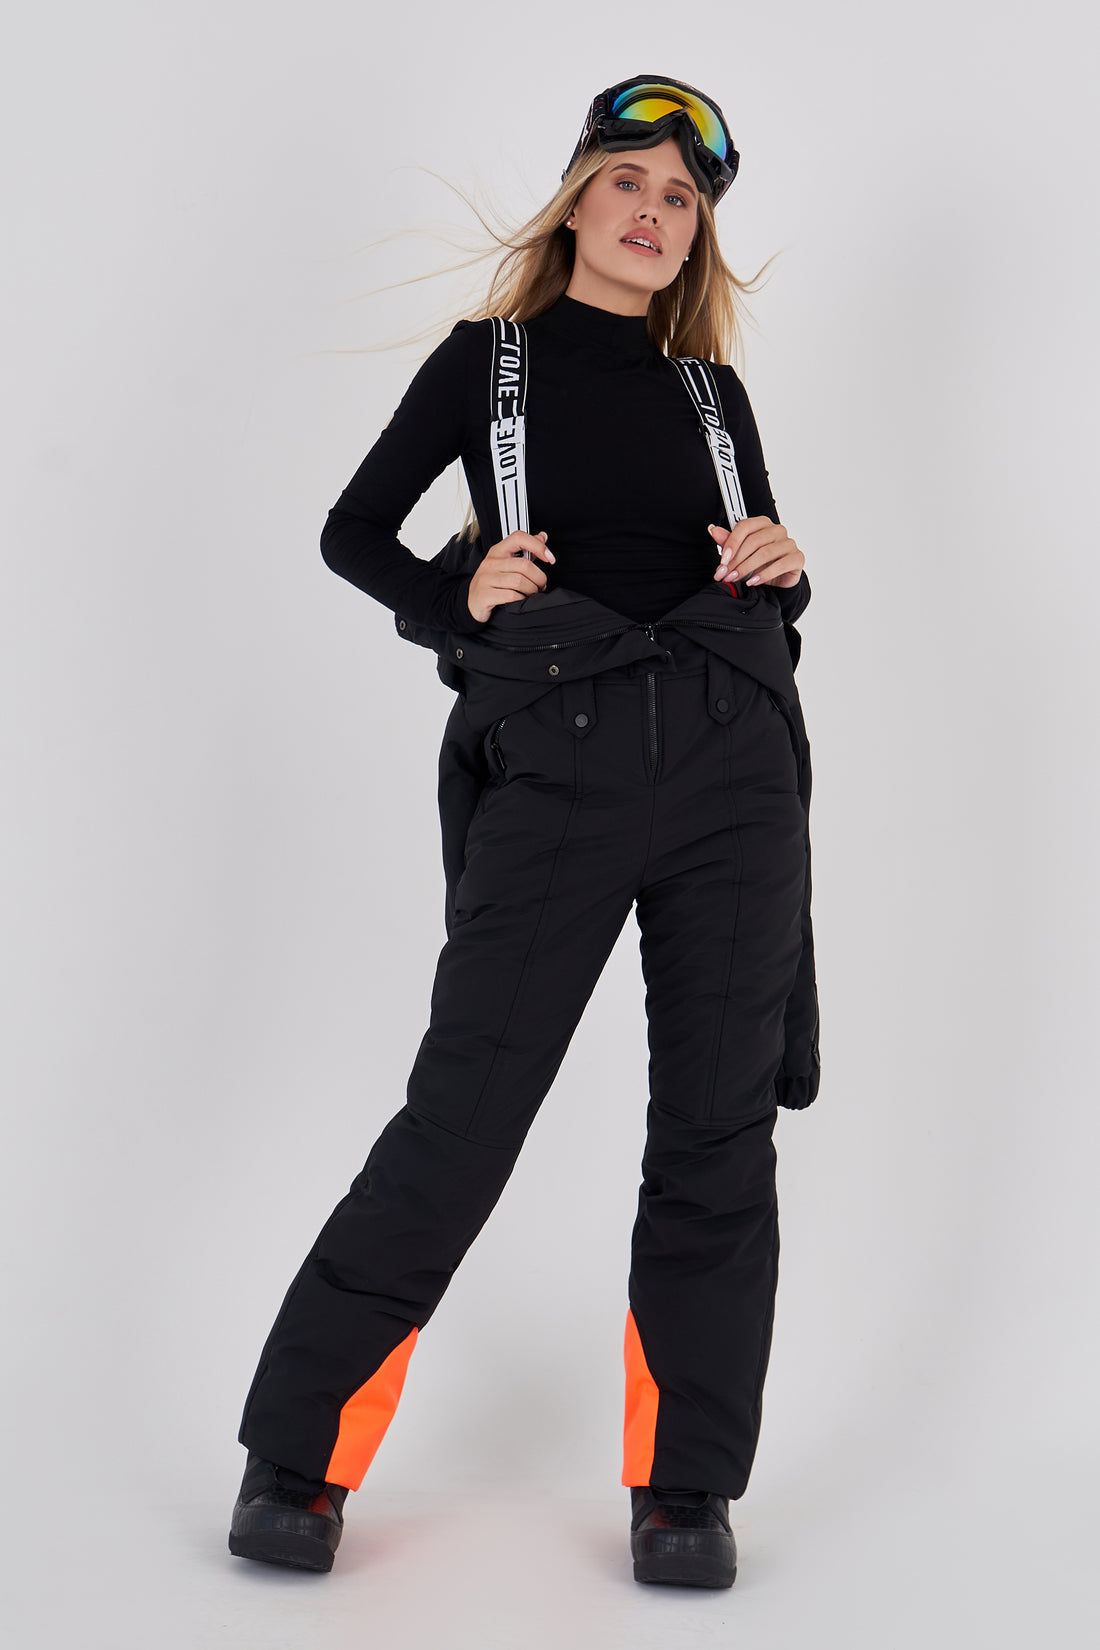 Black ski suit women's RAINIER - BLACK+ORANGE elements waterproof snowsuit